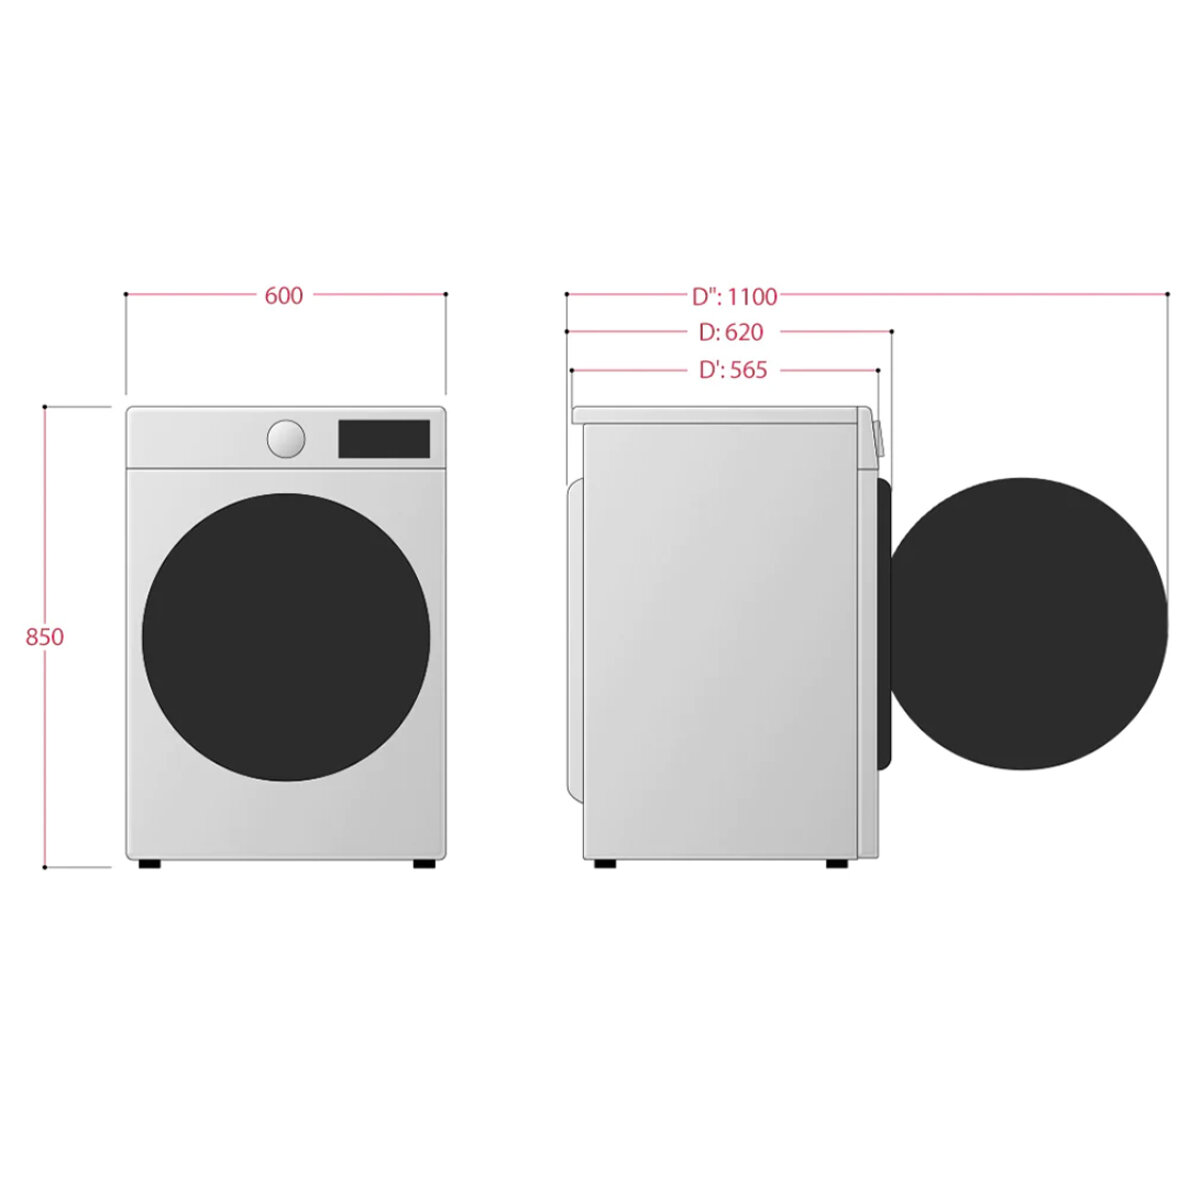 LG WV5-1208W 8kg Slim Series 5 Front Load Washing Machine (White